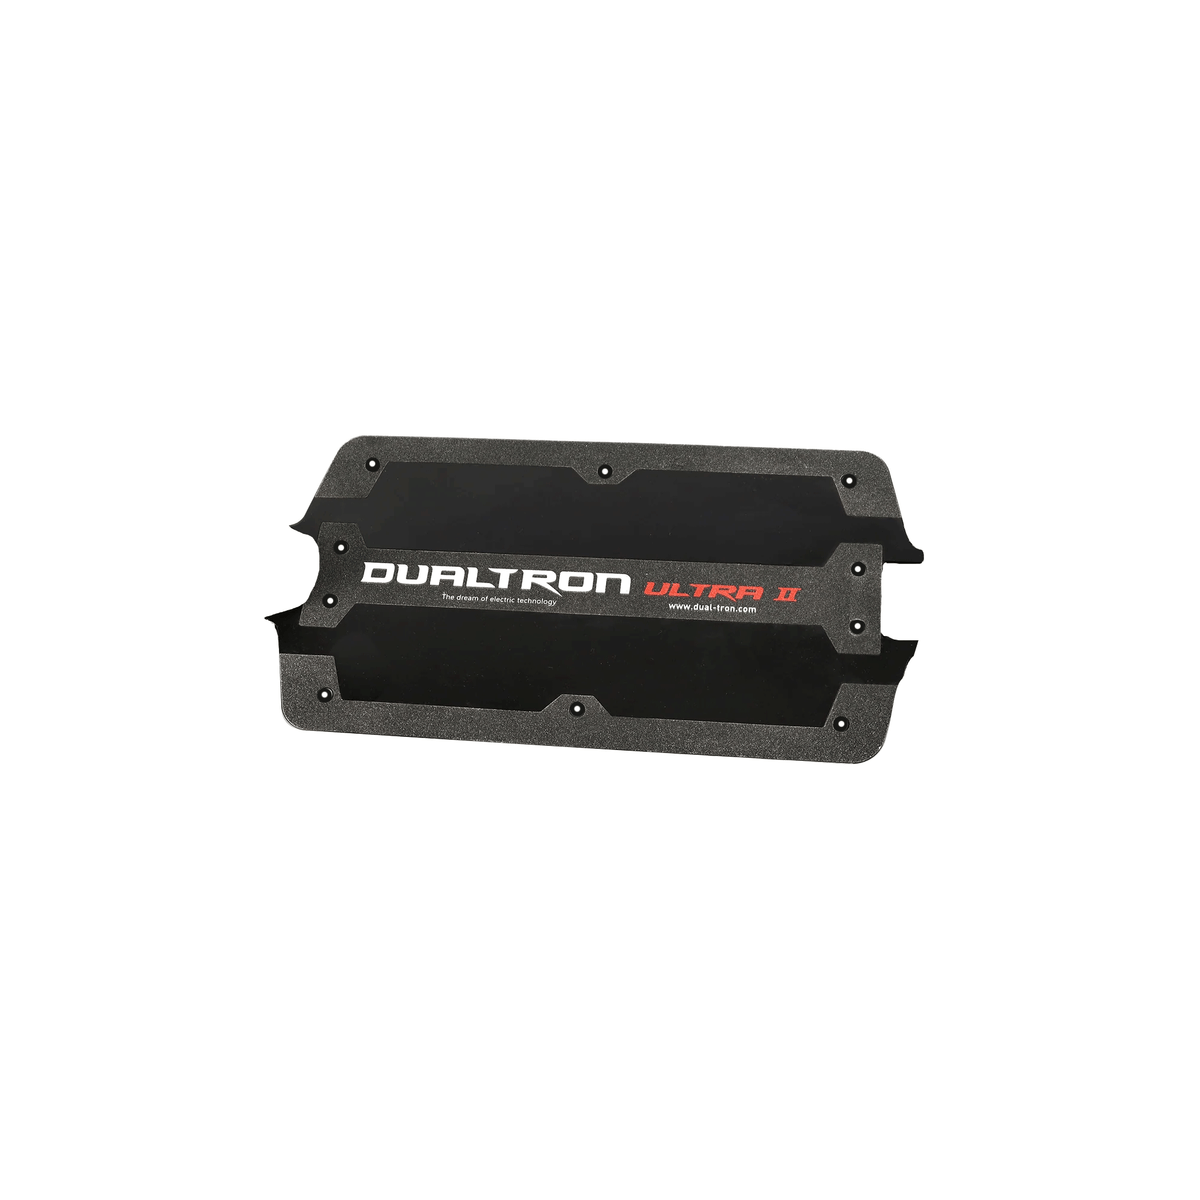 MiniMotors Dualtron Ultra 2 Deck w/ Griptape - Electric Scooter